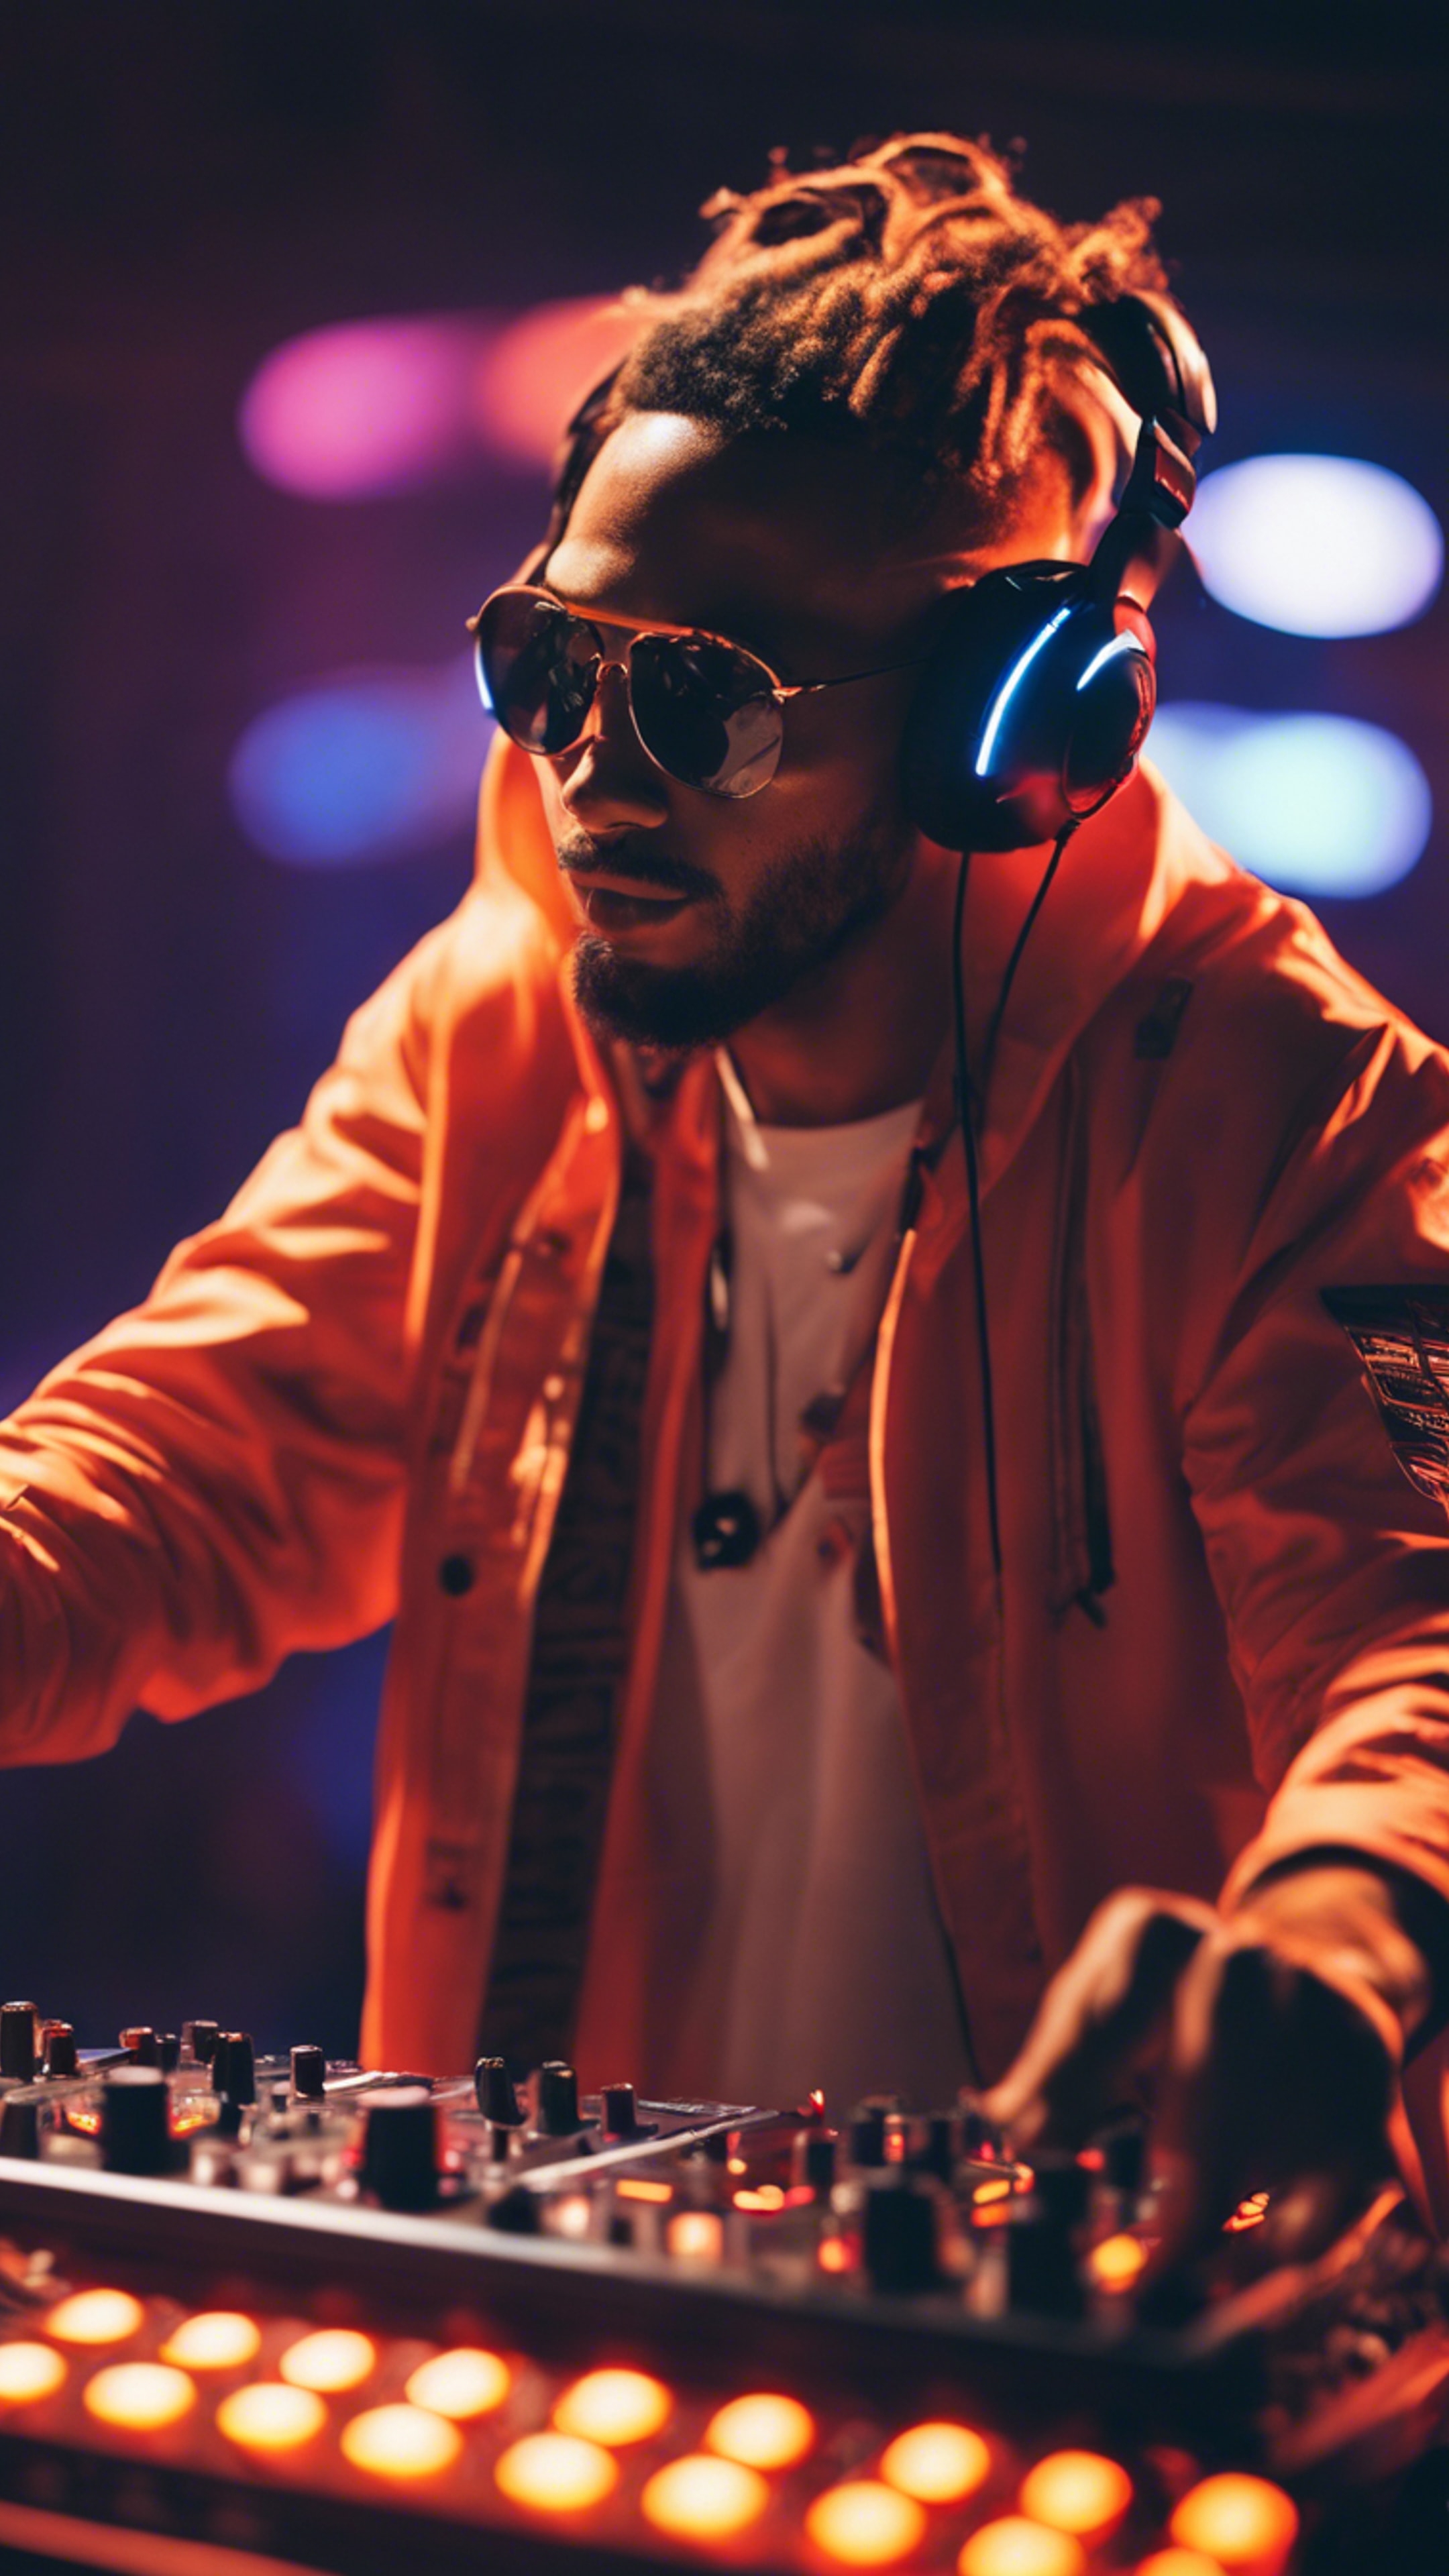 An energetic DJ at a music festival wearing neon orange headphones. Tapéta[135547dc2eef4b3588bf]